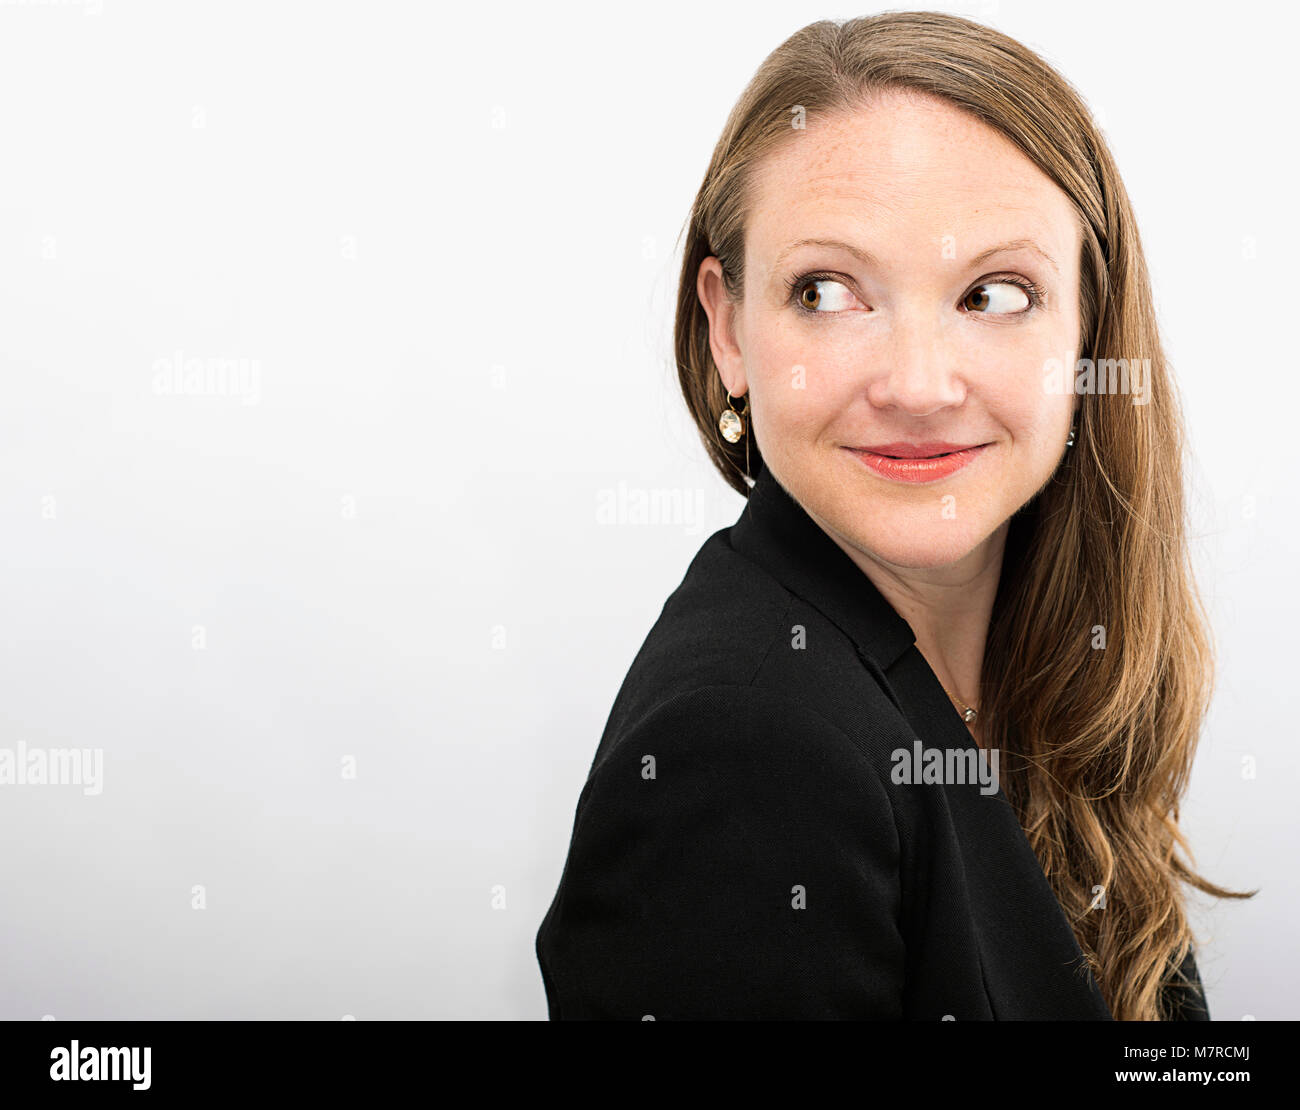 portrait of a woman. Stock Photo